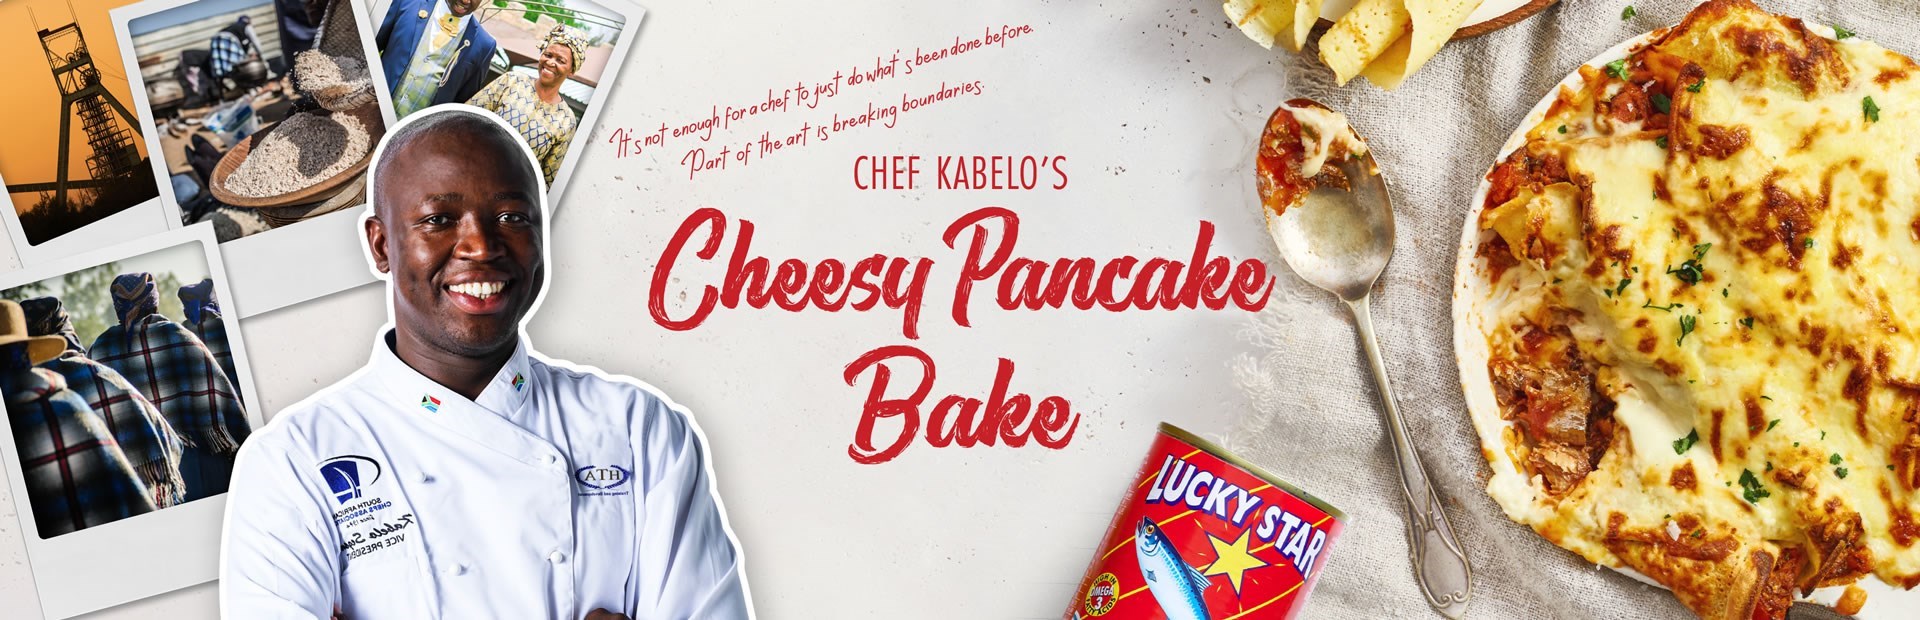 CHEF KABELO’S CHEESY PANCAKE BAKE